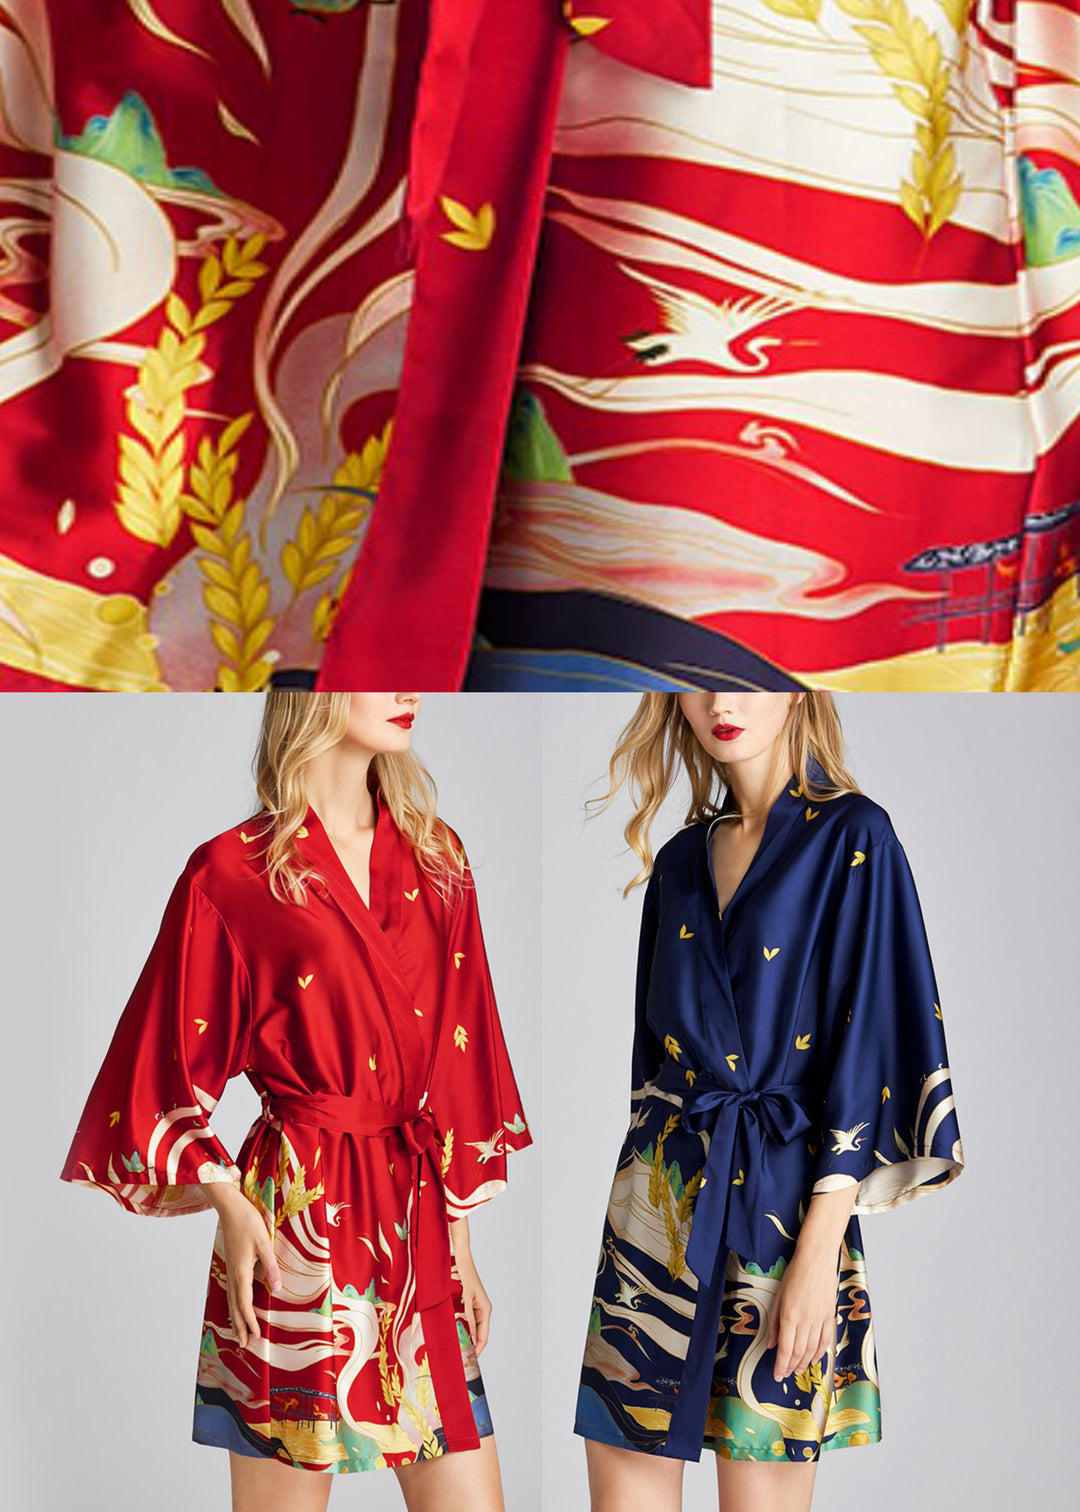 Plus Size Red V Neck Print Ice Silk Mid Dresses Spring